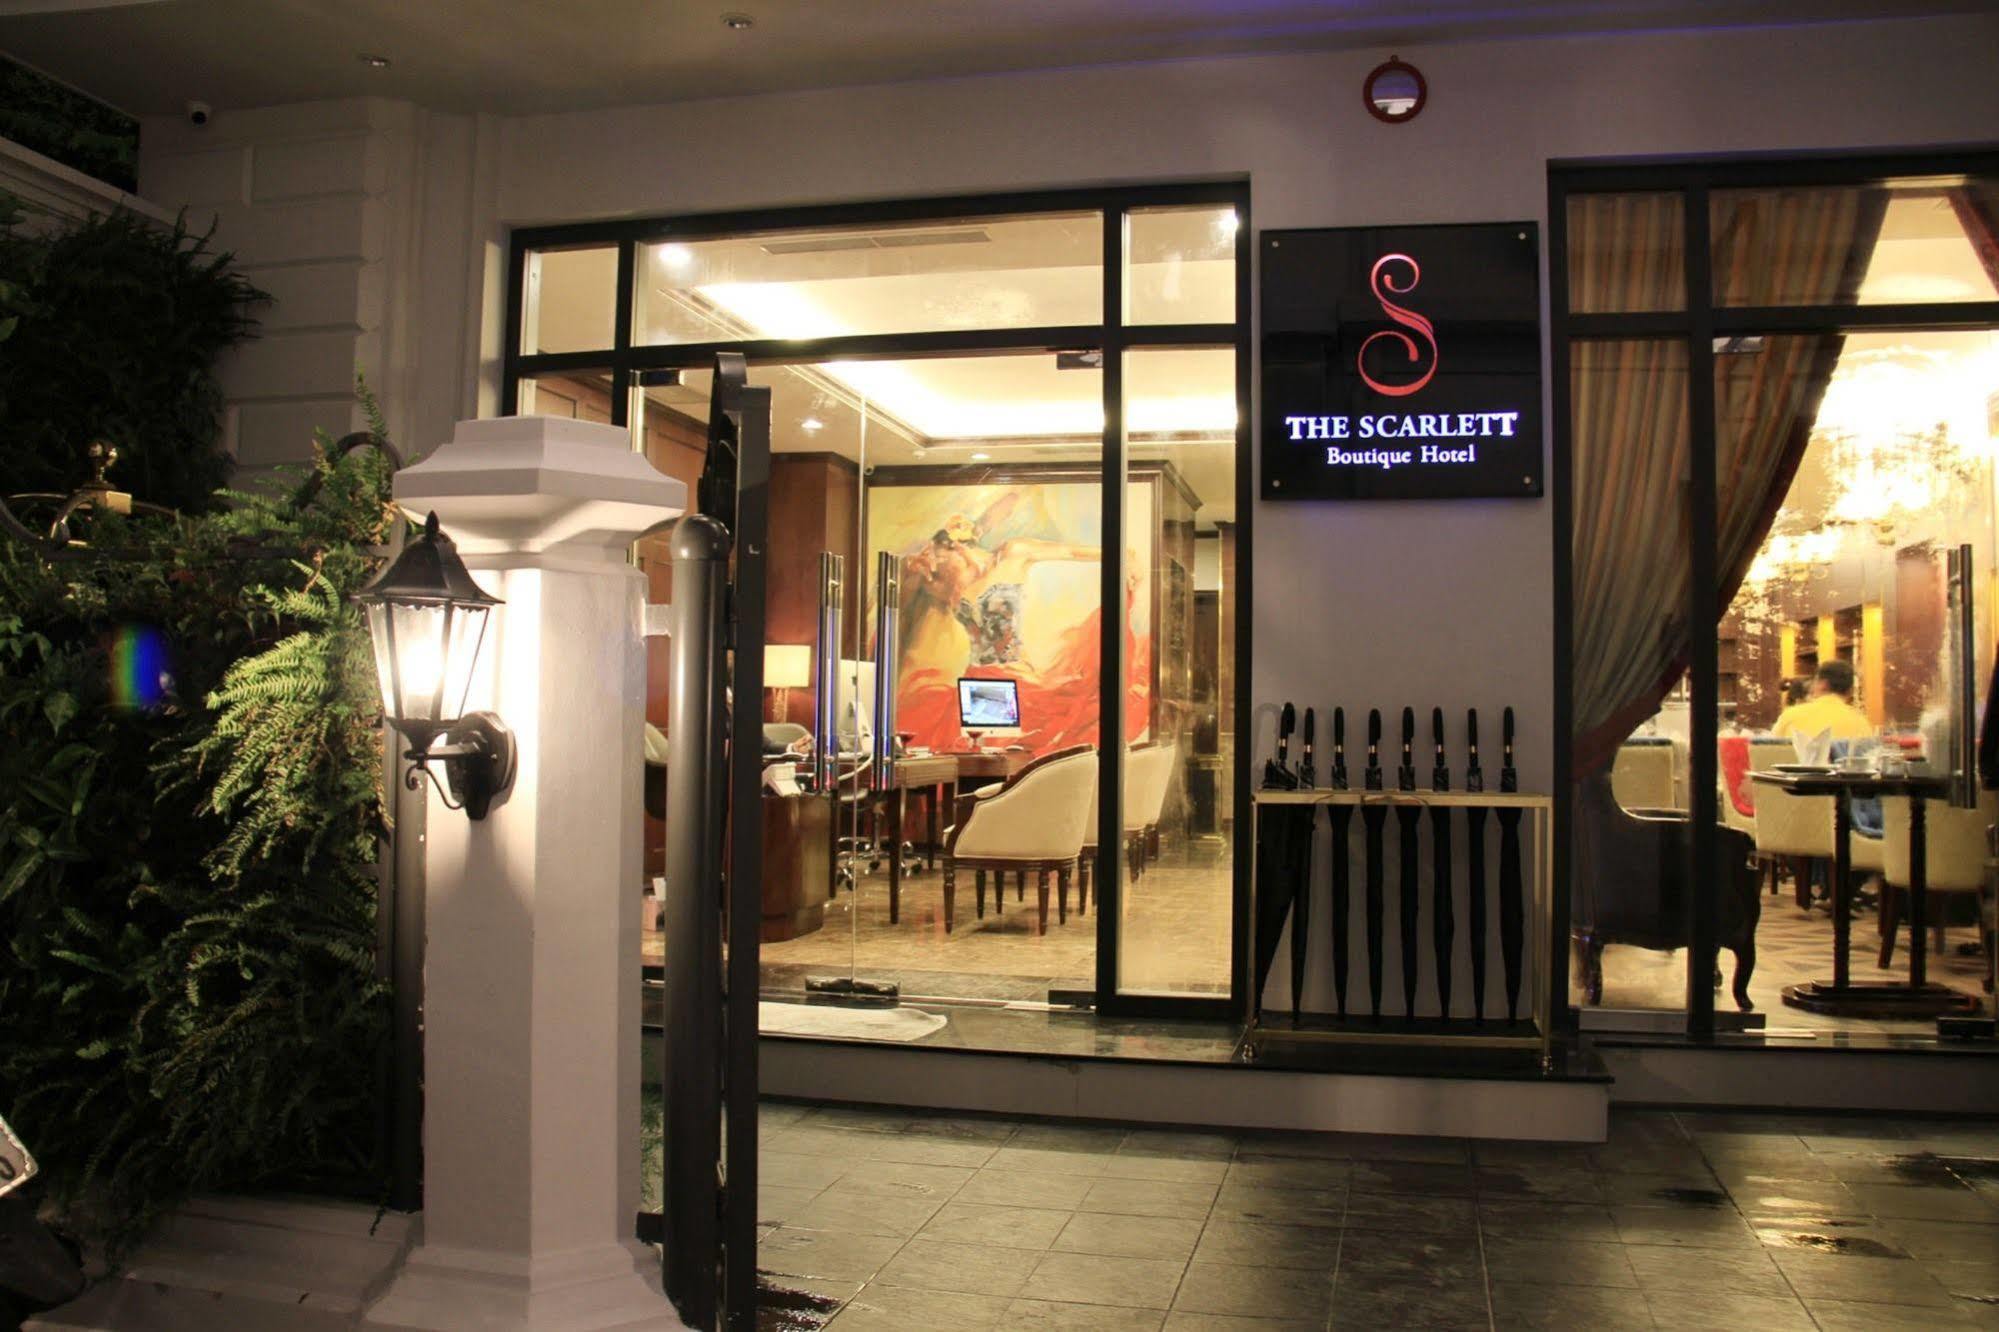 Scarlett Hotel guarantees a memorable experience in a wonderful atmosphere